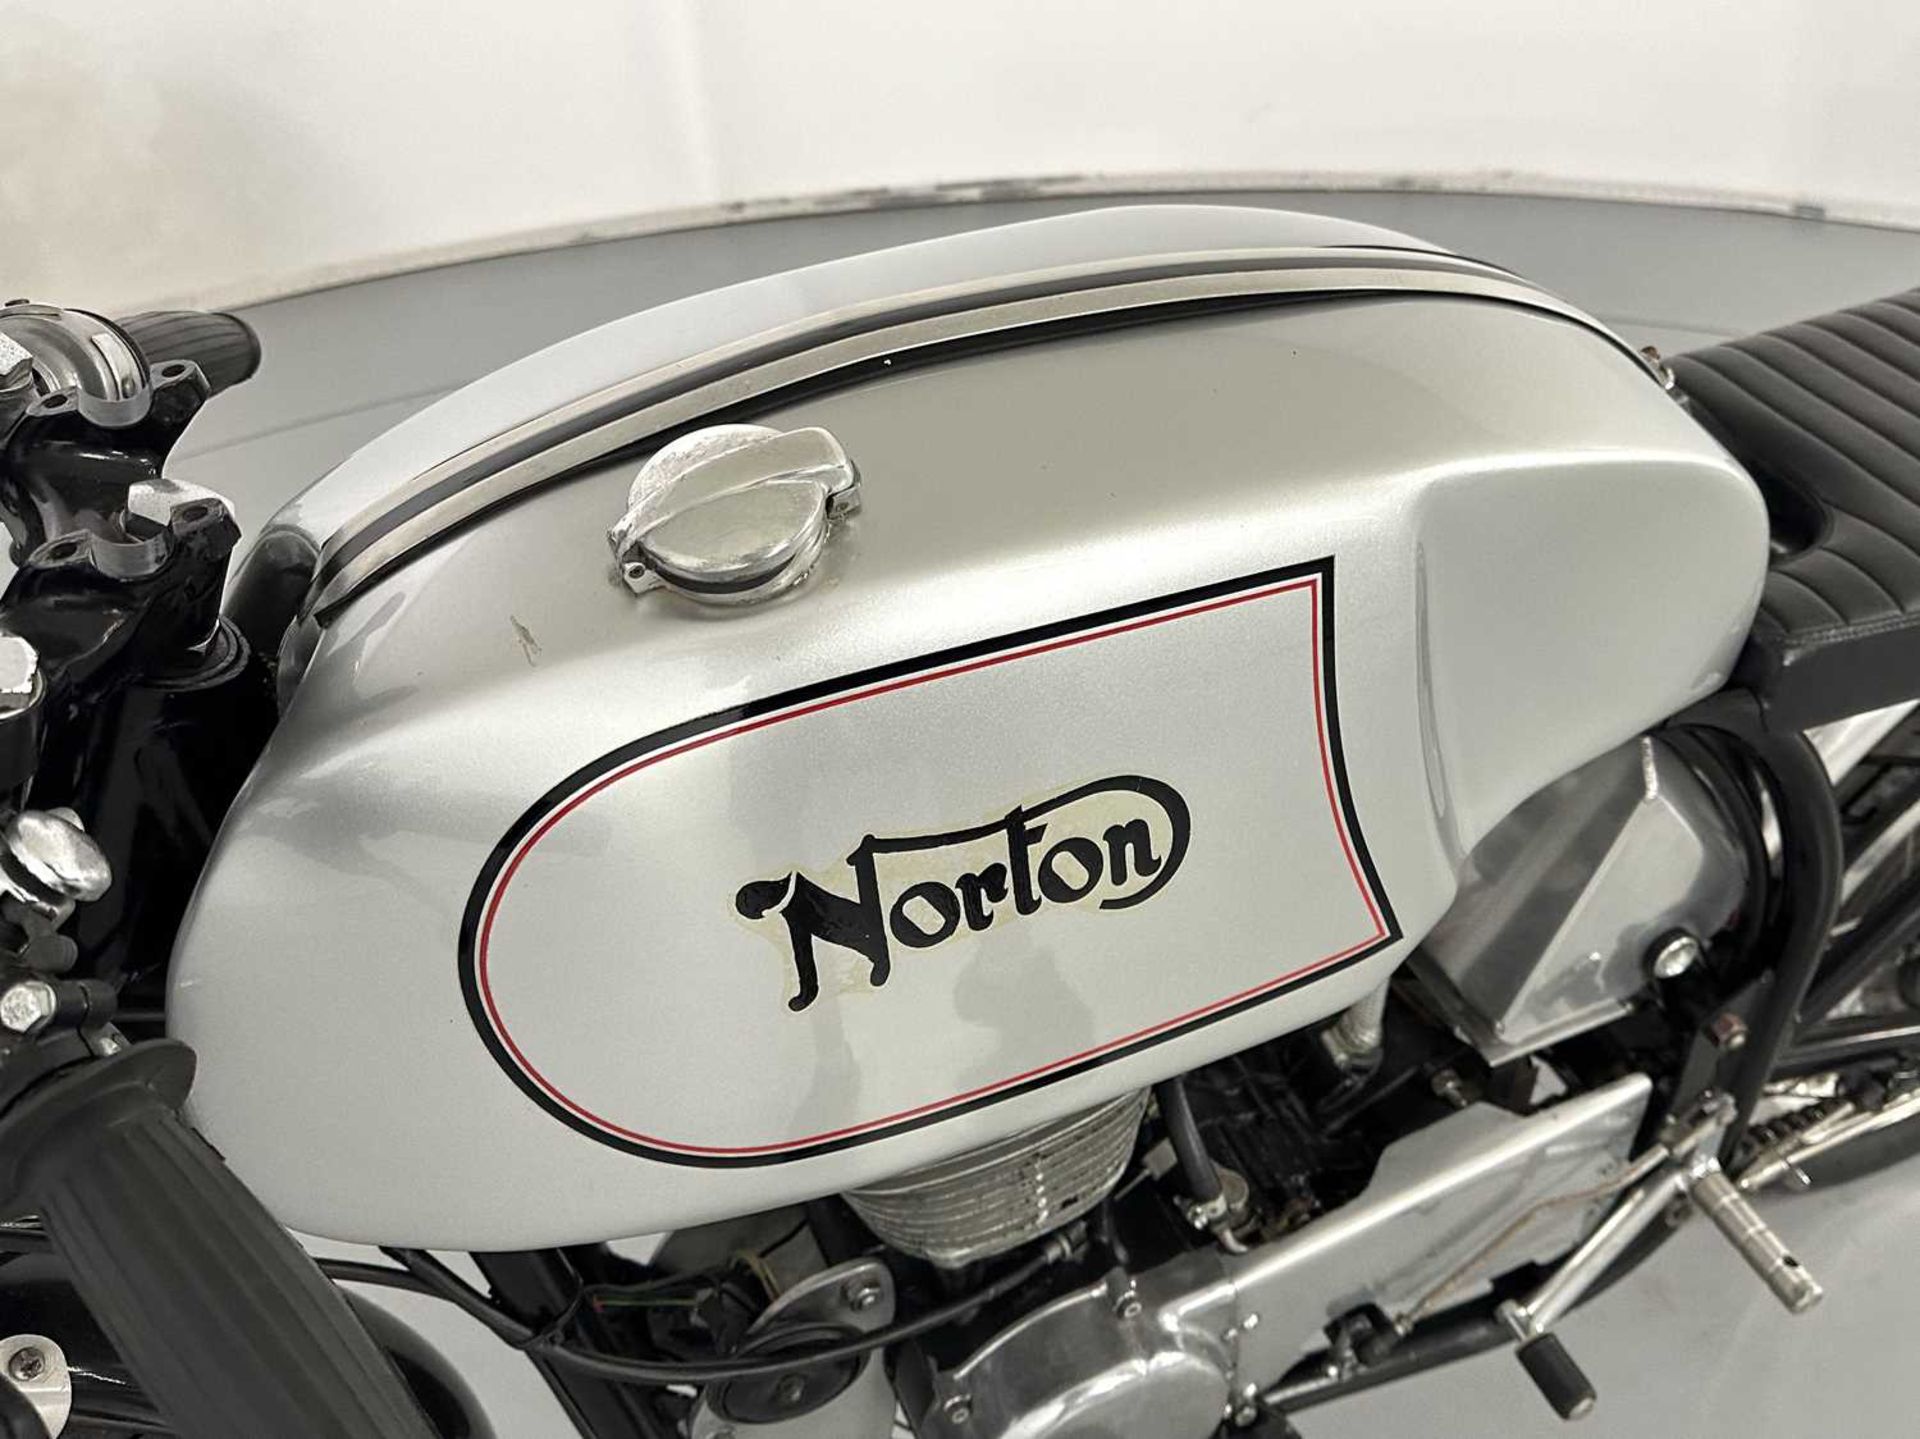 1964 Norton Manx 500cc - Image 19 of 22